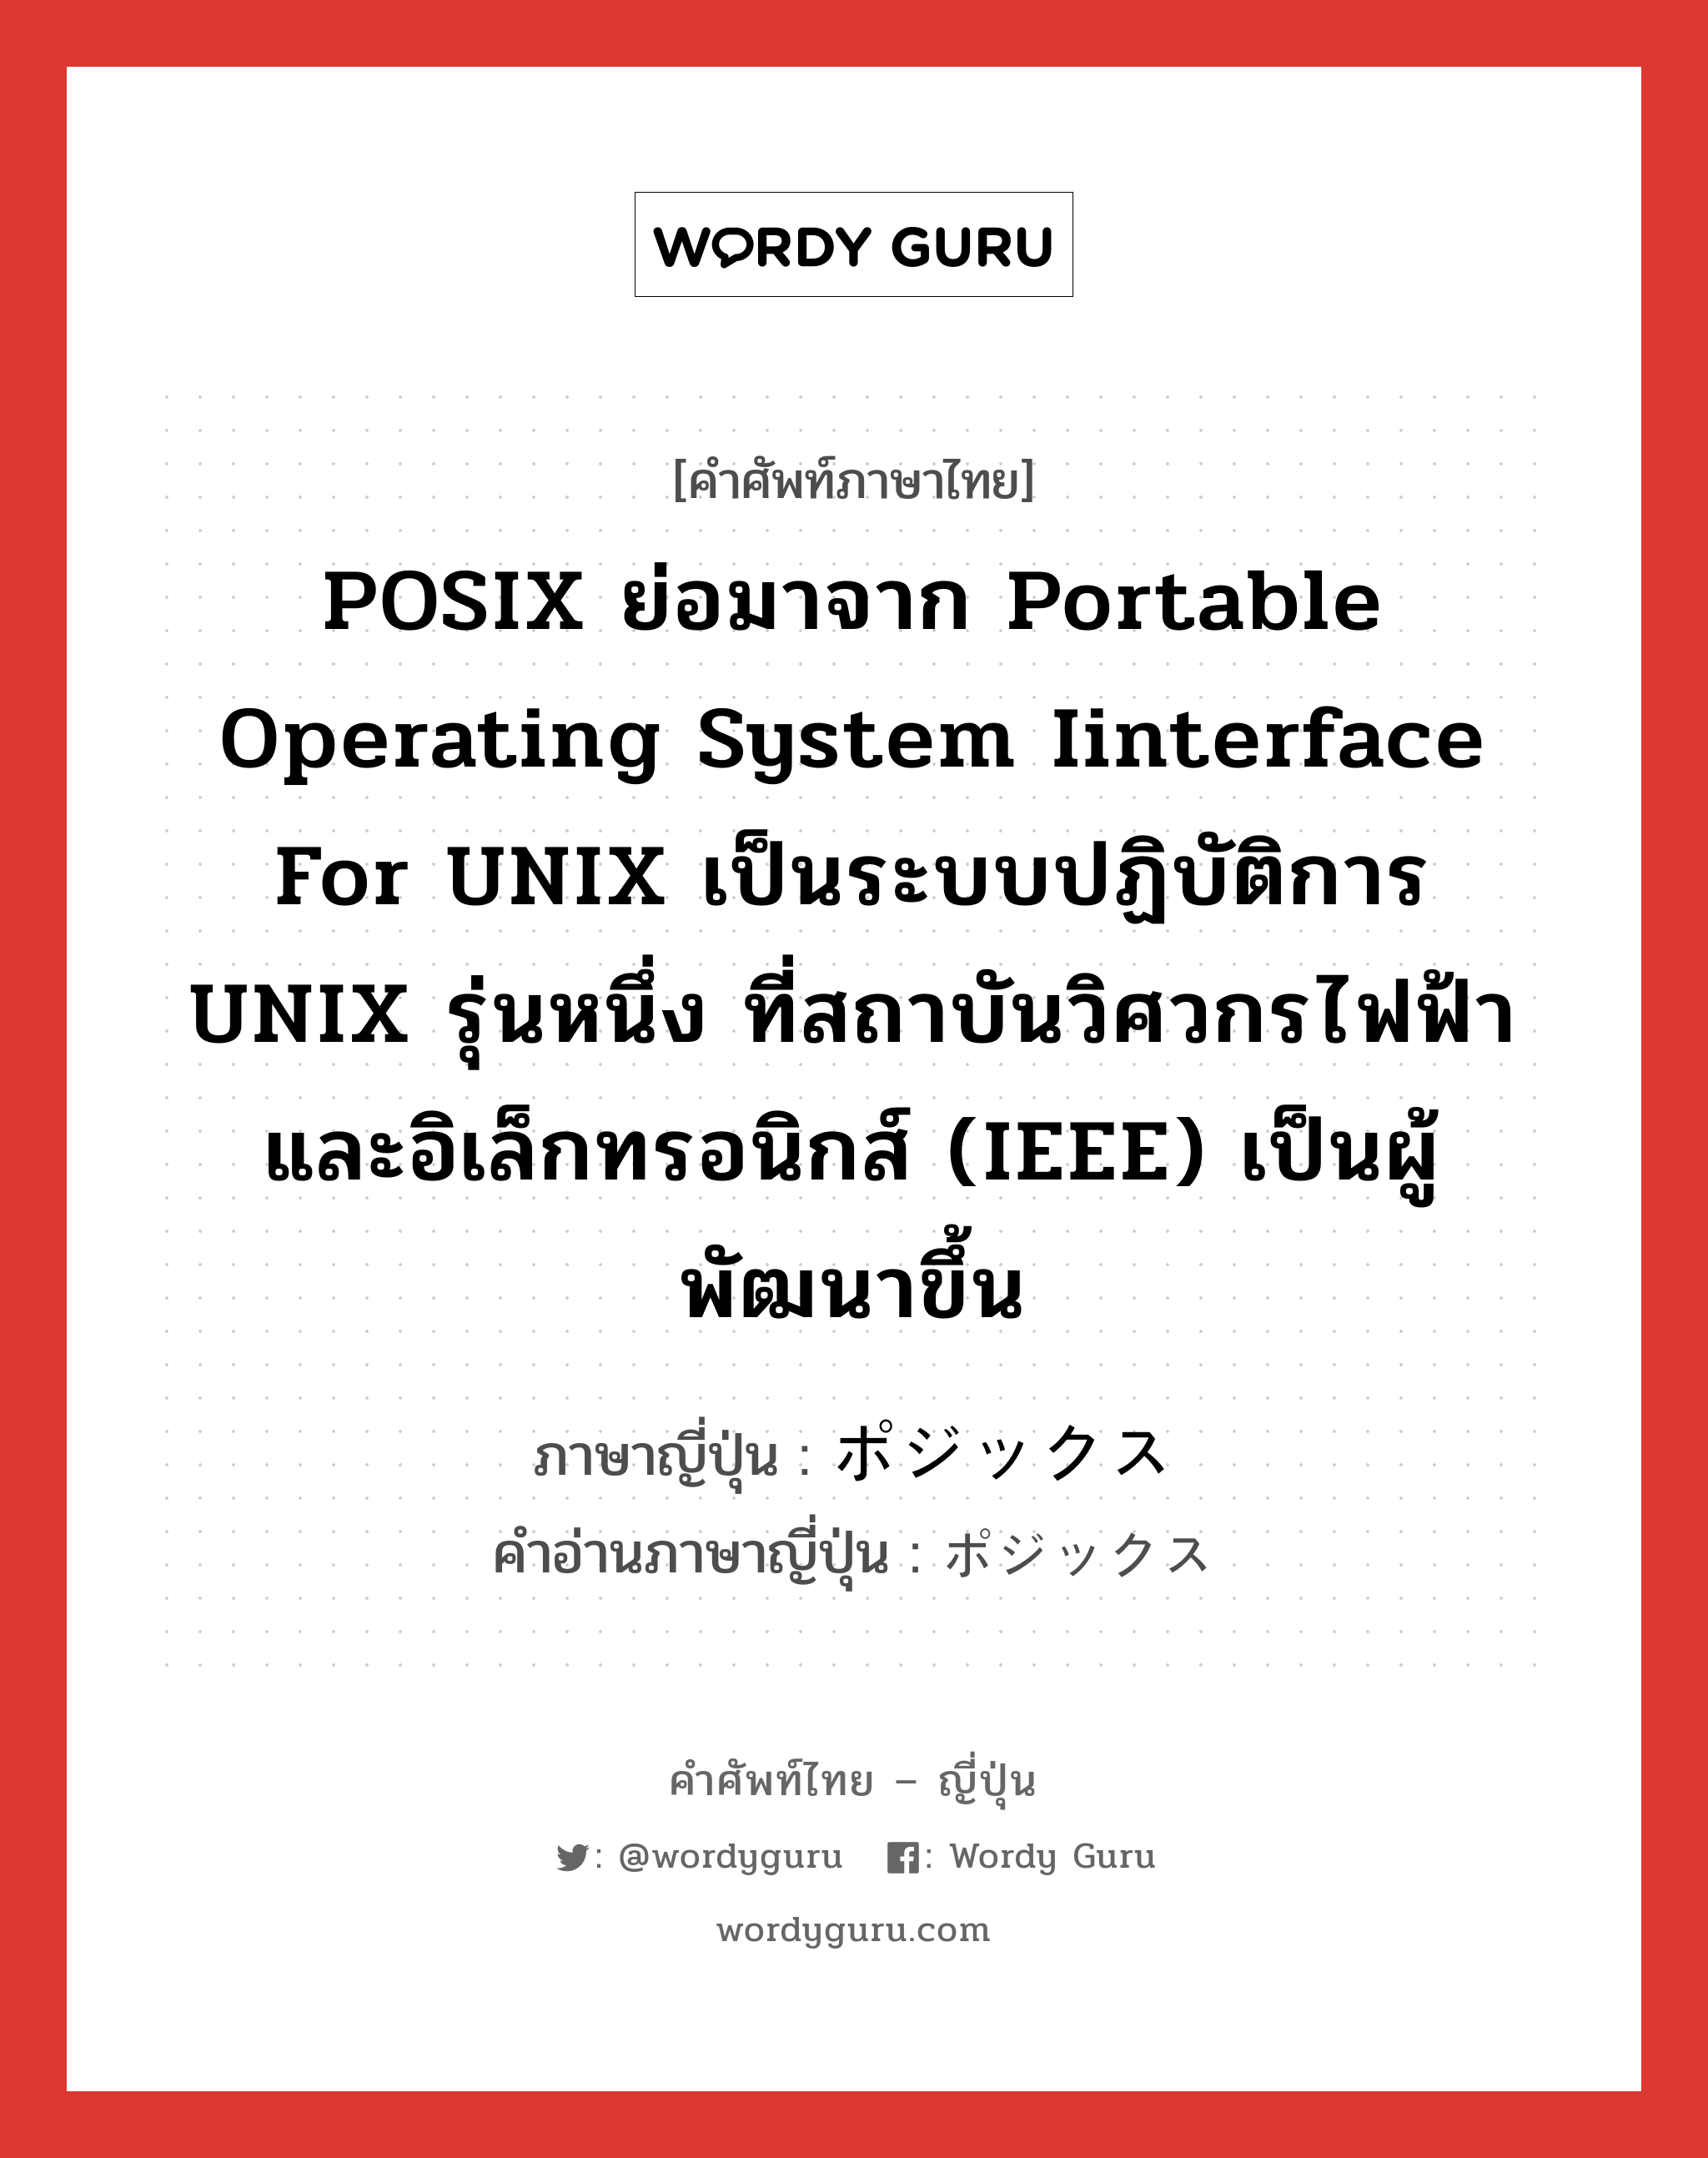 POSIX ย่อมาจาก Portable Operating System Iinterface for UNIX เป็นระบบปฏิบัติการ UNIX รุ่นหนึ่ง ที่สถาบันวิศวกรไฟฟ้าและอิเล็กทรอนิกส์ (IEEE) เป็นผู้พัฒนาขึ้น ภาษาญี่ปุ่นคืออะไร, คำศัพท์ภาษาไทย - ญี่ปุ่น POSIX ย่อมาจาก Portable Operating System Iinterface for UNIX เป็นระบบปฏิบัติการ UNIX รุ่นหนึ่ง ที่สถาบันวิศวกรไฟฟ้าและอิเล็กทรอนิกส์ (IEEE) เป็นผู้พัฒนาขึ้น ภาษาญี่ปุ่น ポジックス คำอ่านภาษาญี่ปุ่น ポジックス หมวด n หมวด n